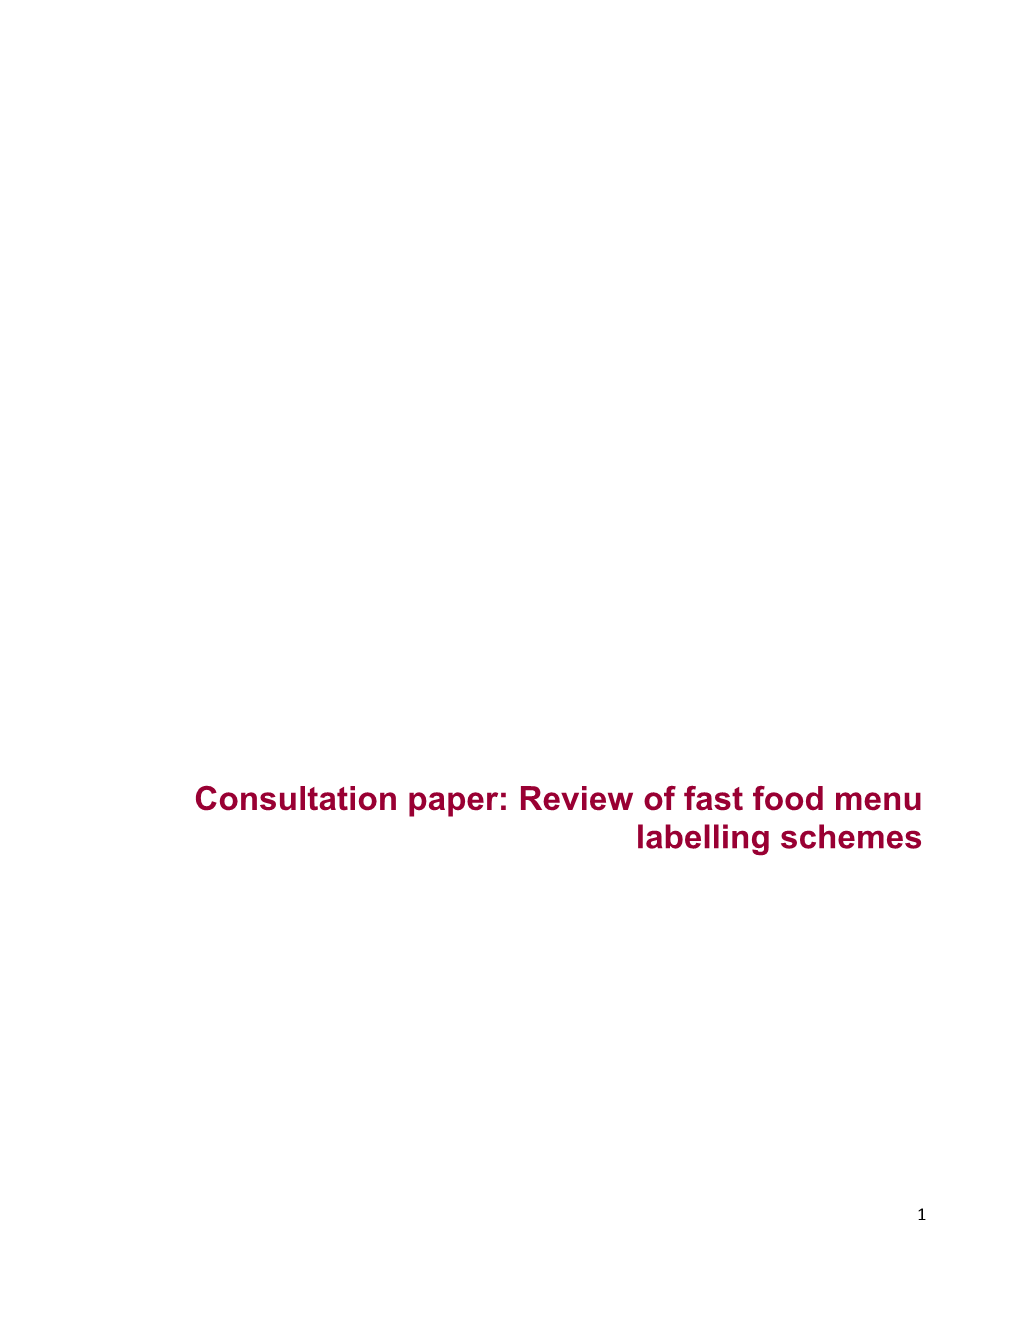 Consultationpaper: Reviewof Fast Food Menu Labelling Schemes